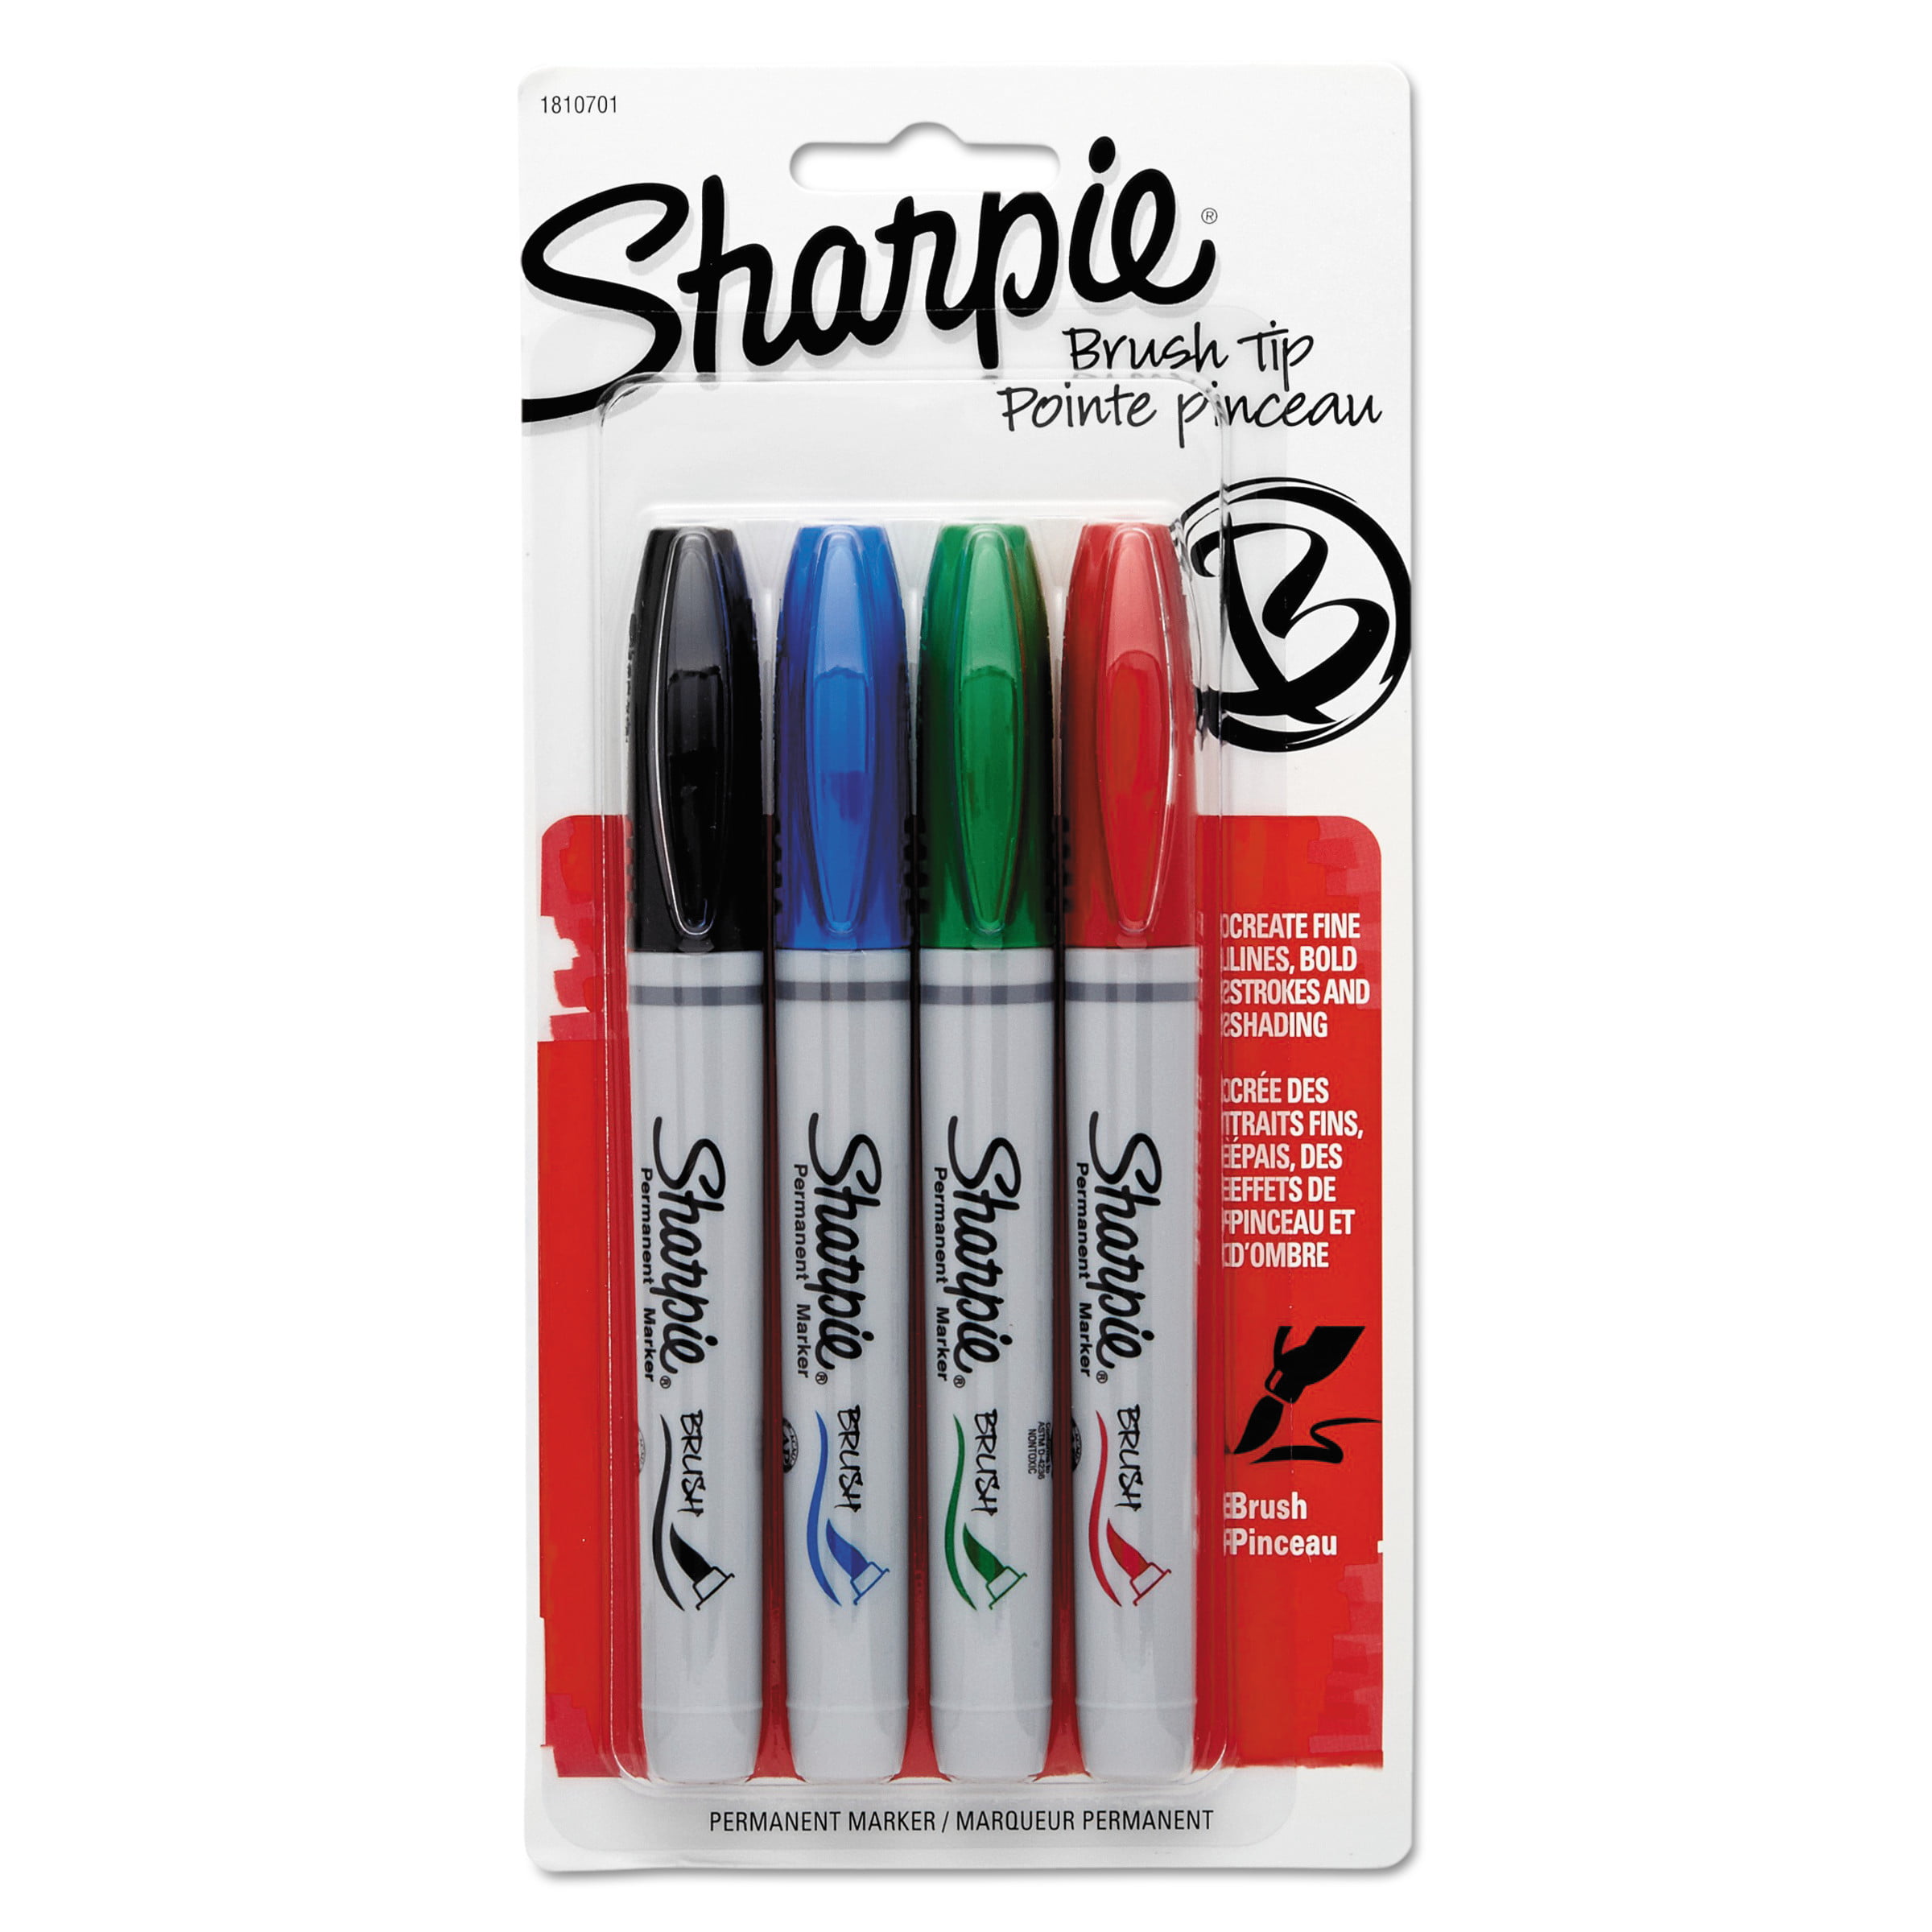 Sharpie Brush Tip Permanent Marker Black for sale online 